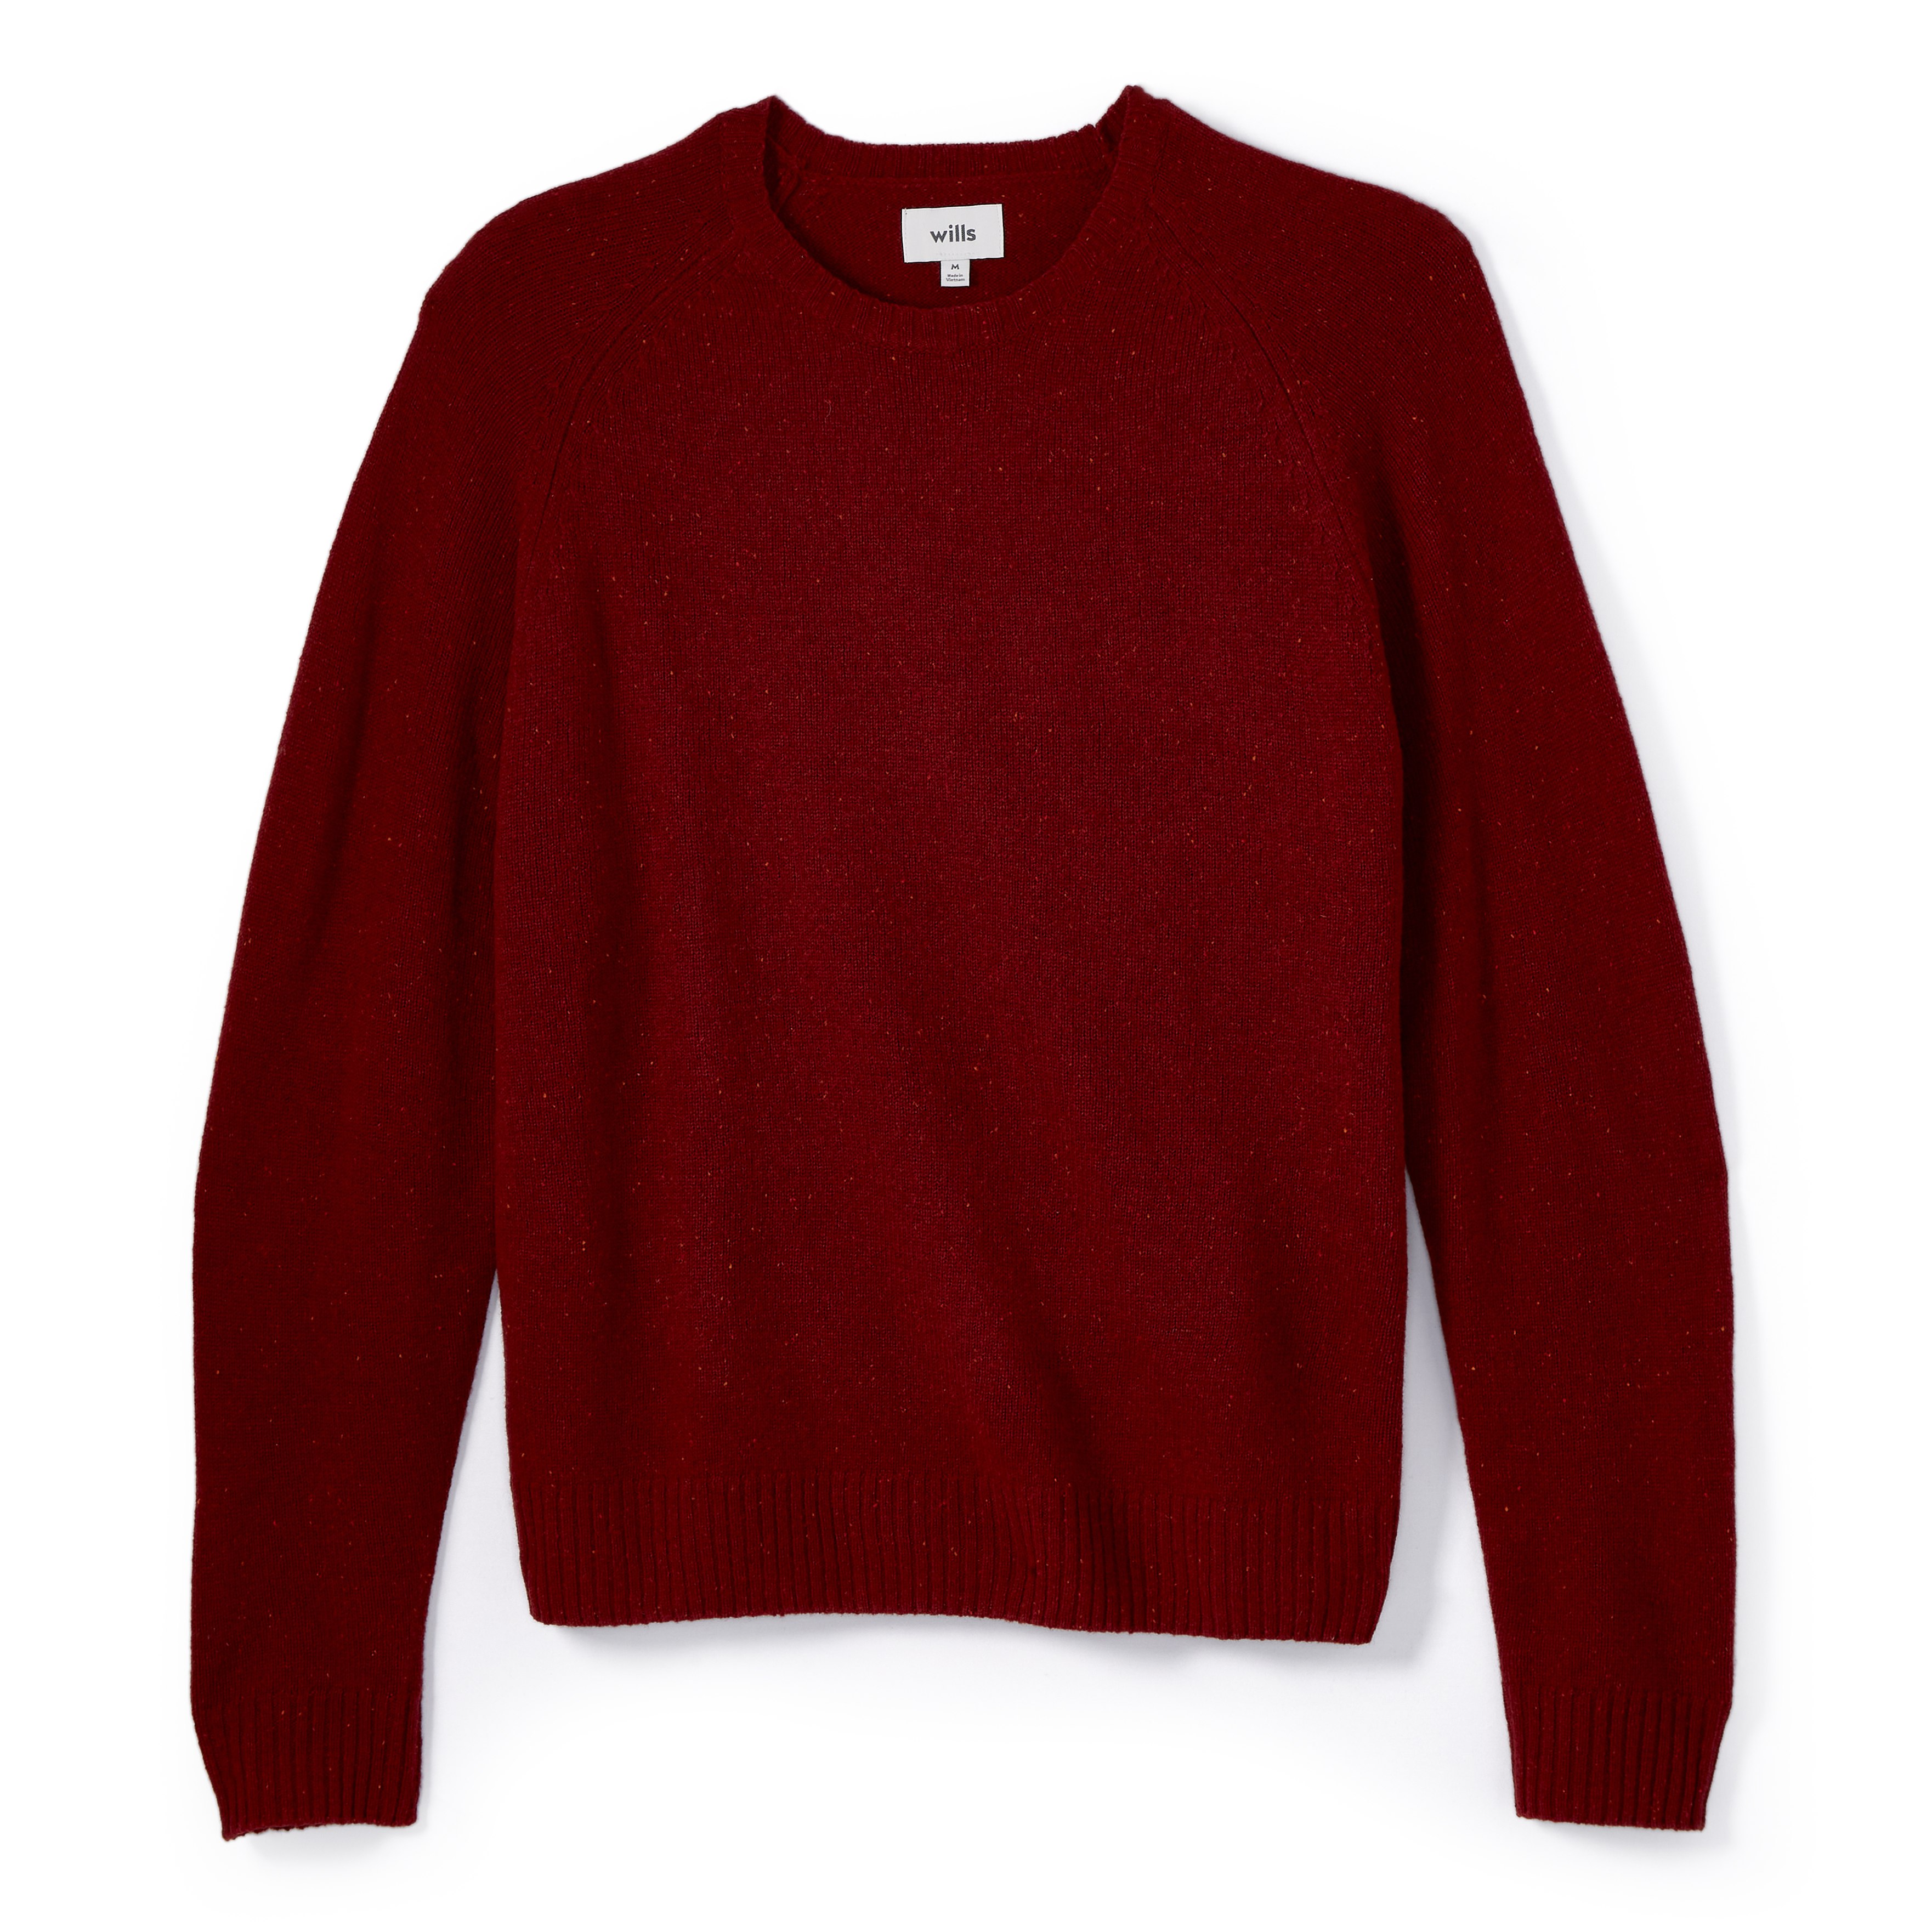 Wills Speckled Merino Wool Crewneck Sweater - Bonfire | Crew Neck